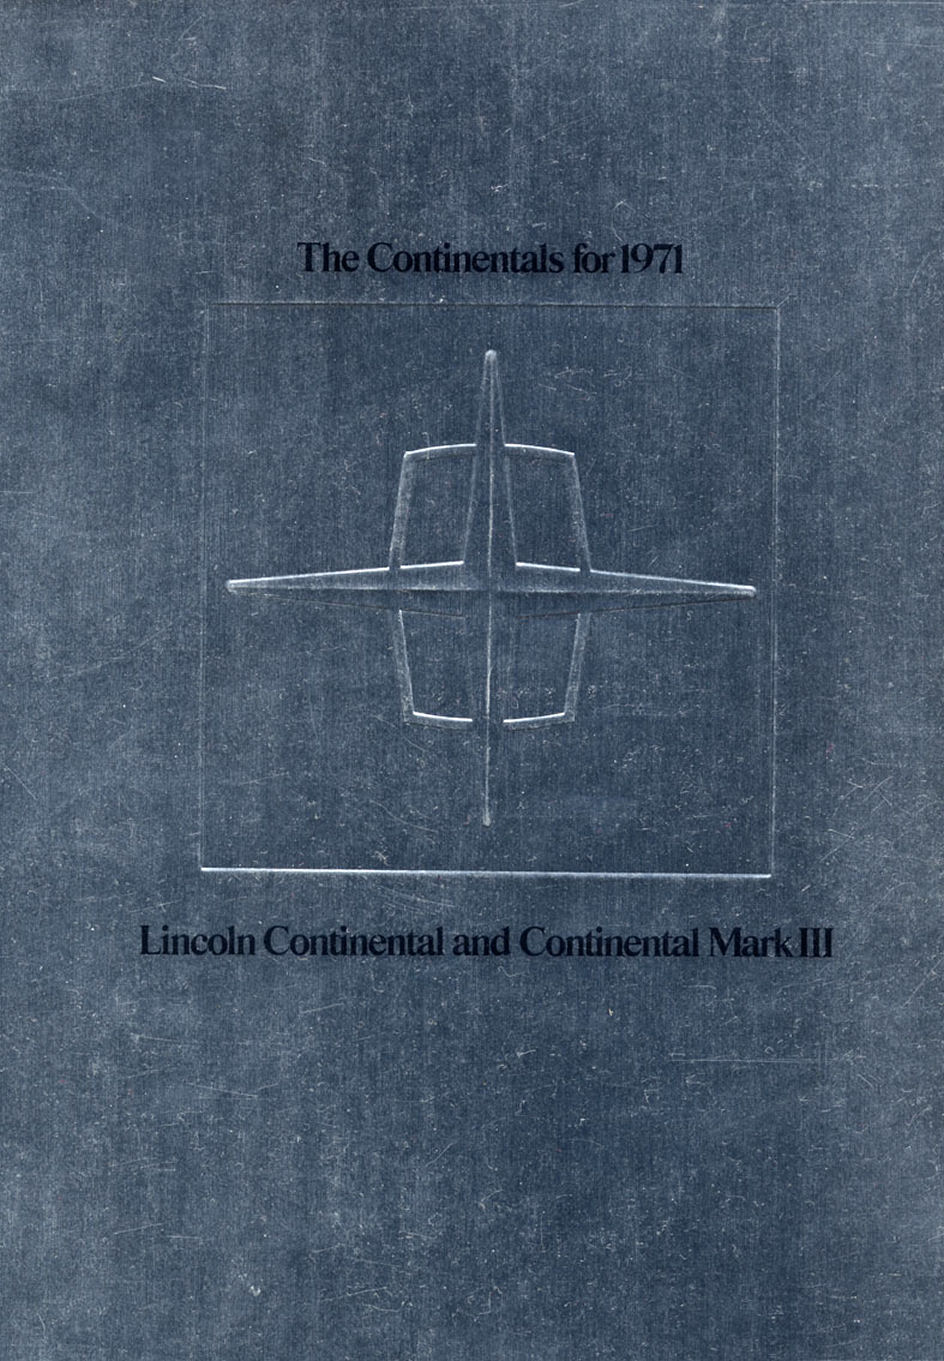 1971_Lincoln_Continental-01